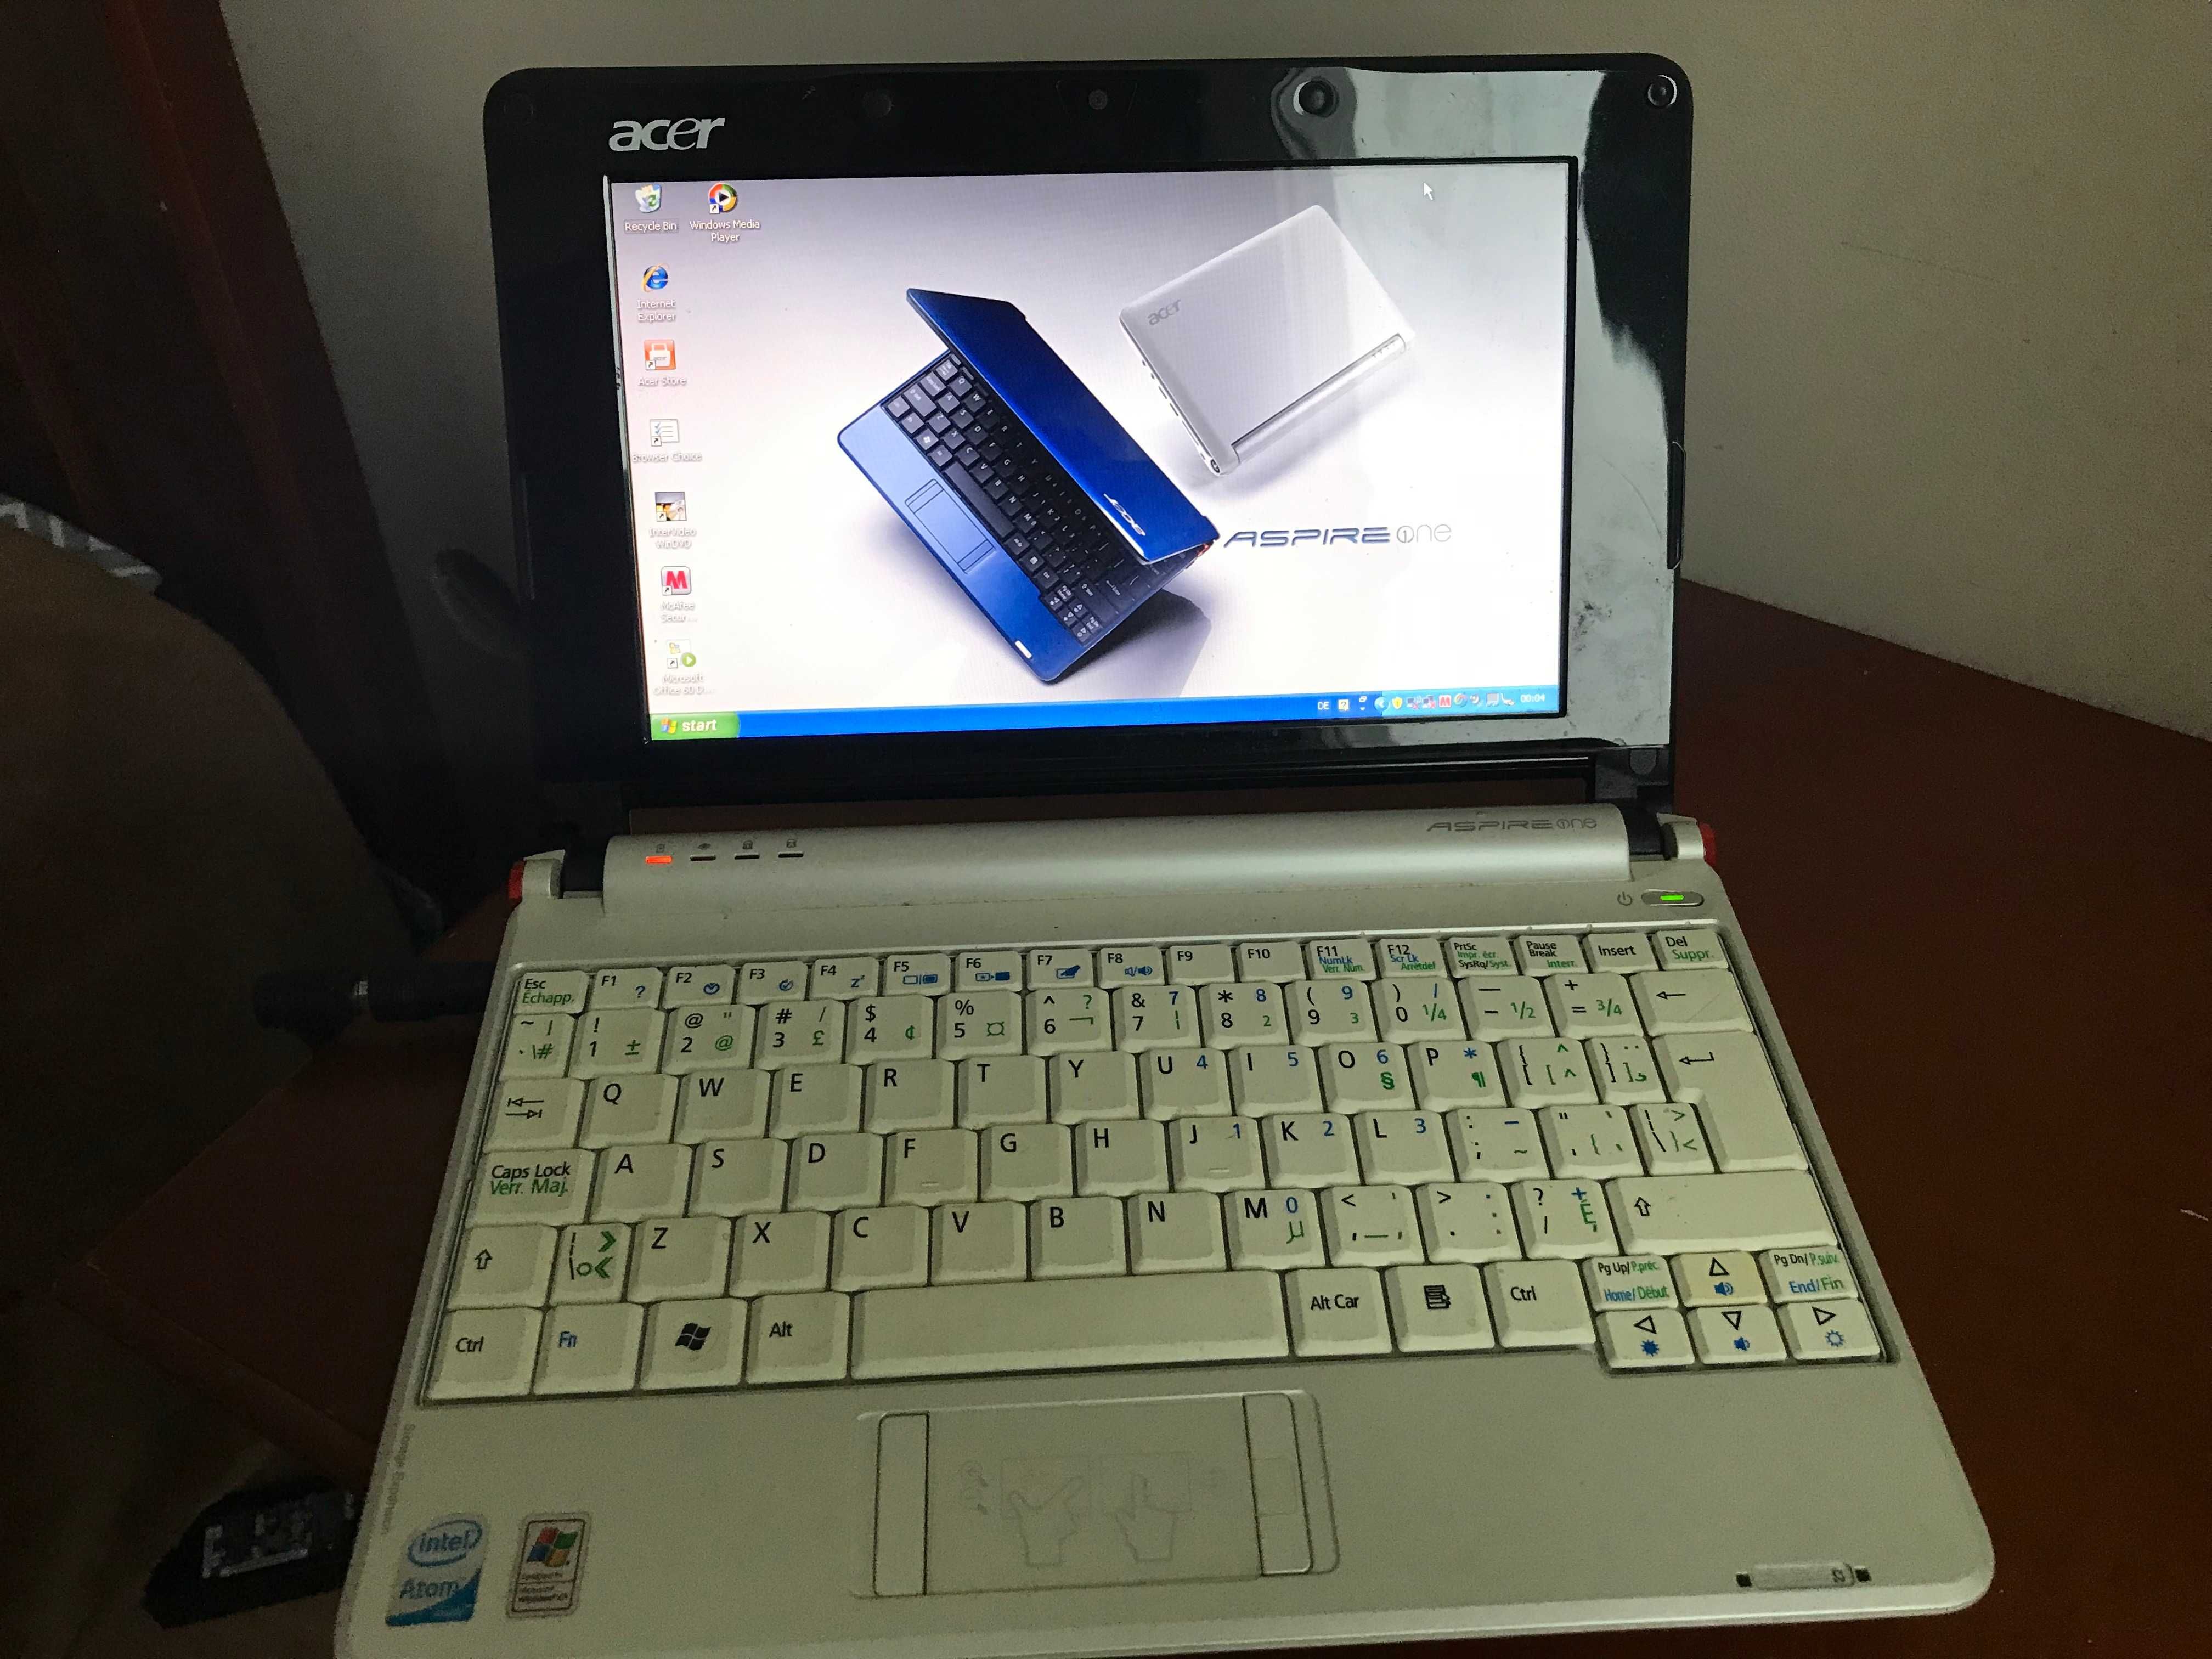 Нетбук Acer ZG5 двоядерний,  екран 10.1, Intel Atom N270 1,6 GHz